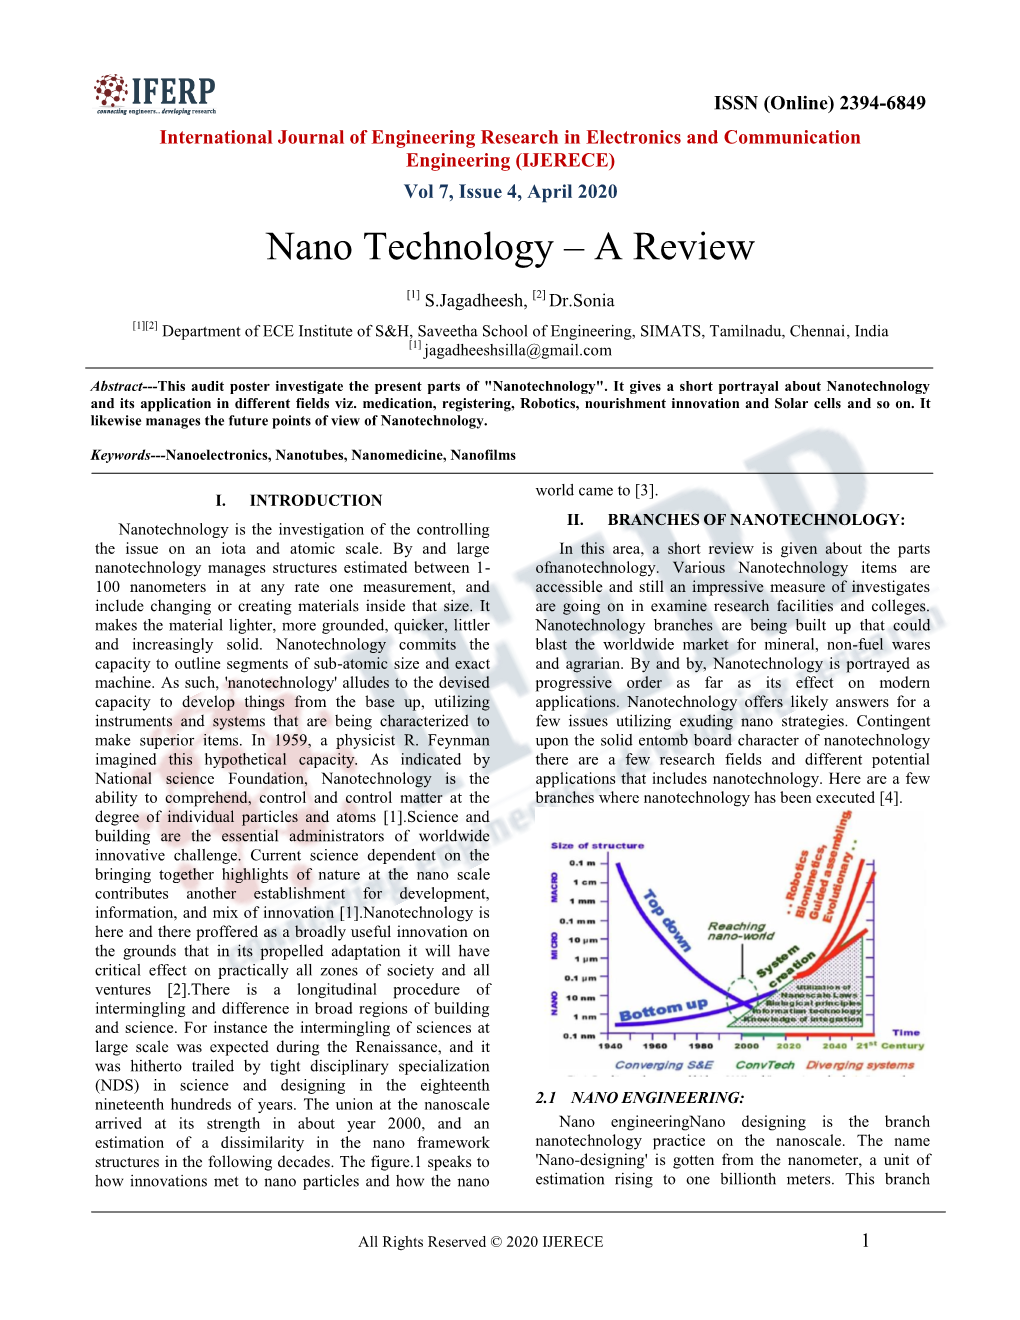 Nano Technology – a Review